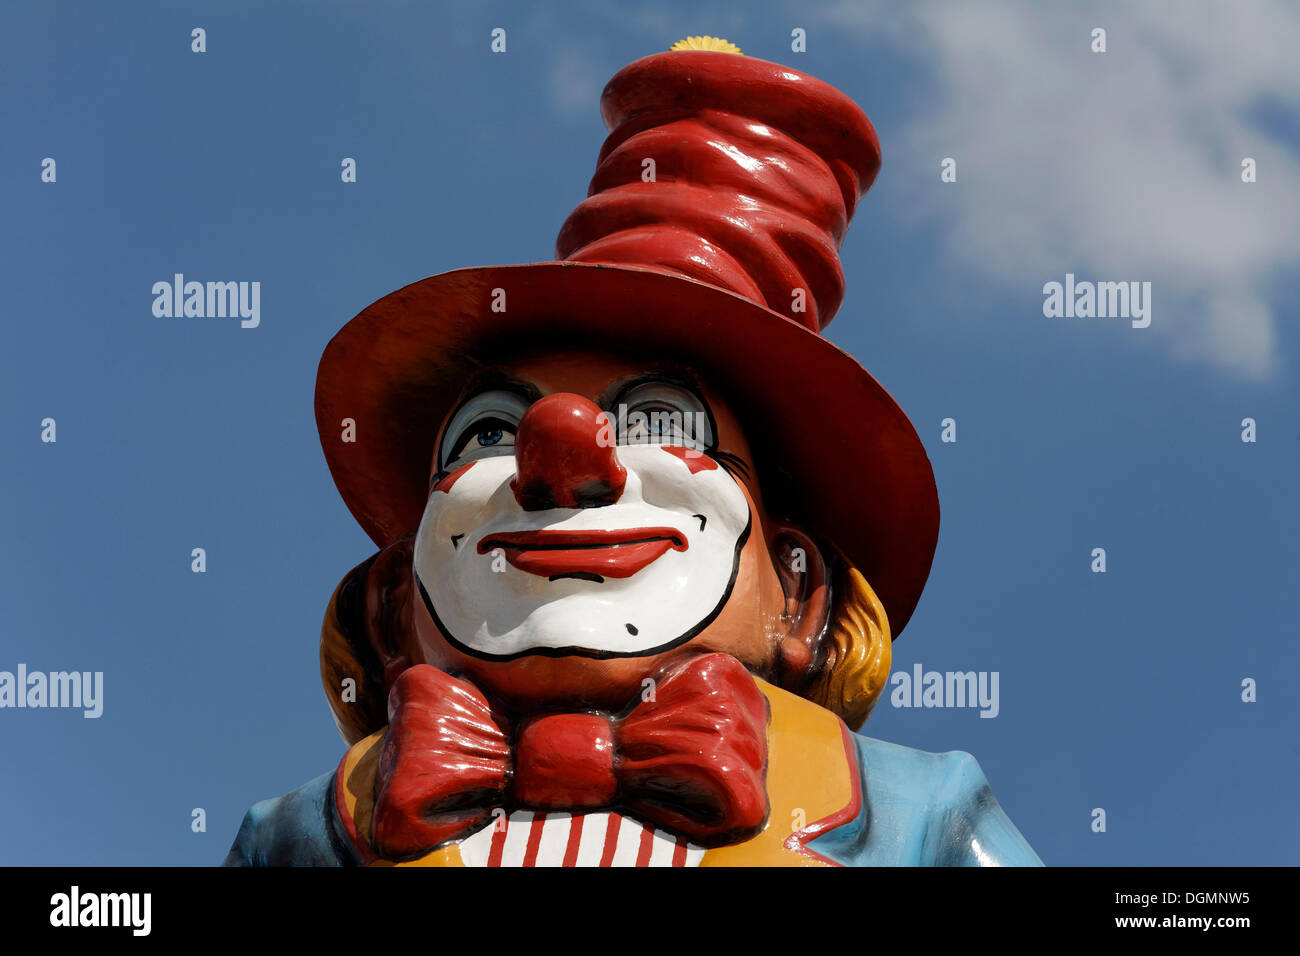 Clown with a top hat, fun fair figure Stock Photo